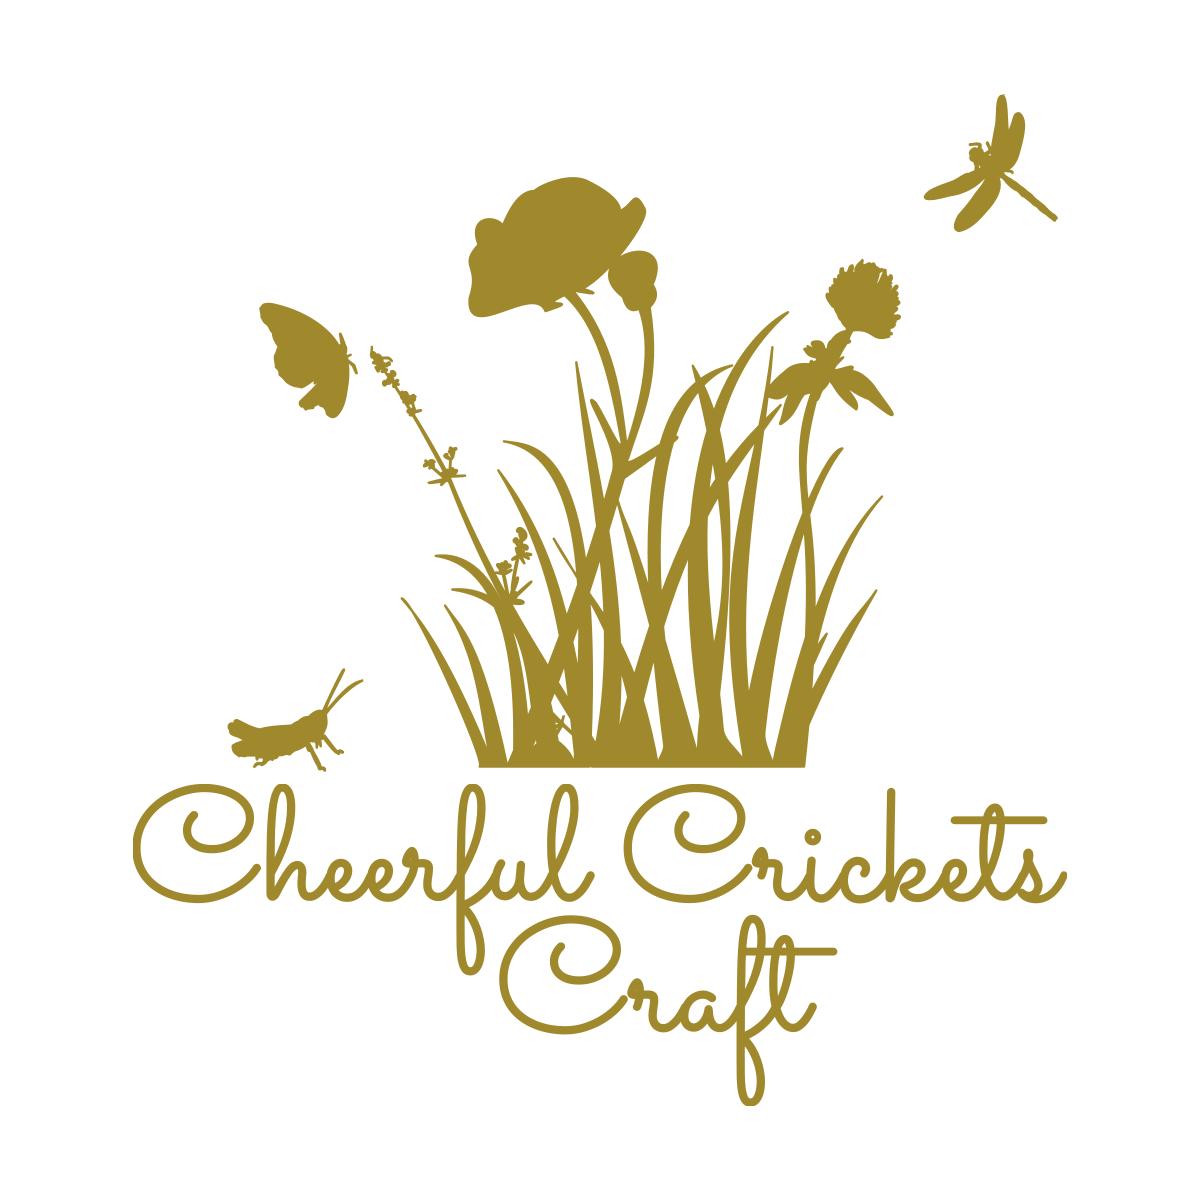 Cheerful Crickets Craft logo